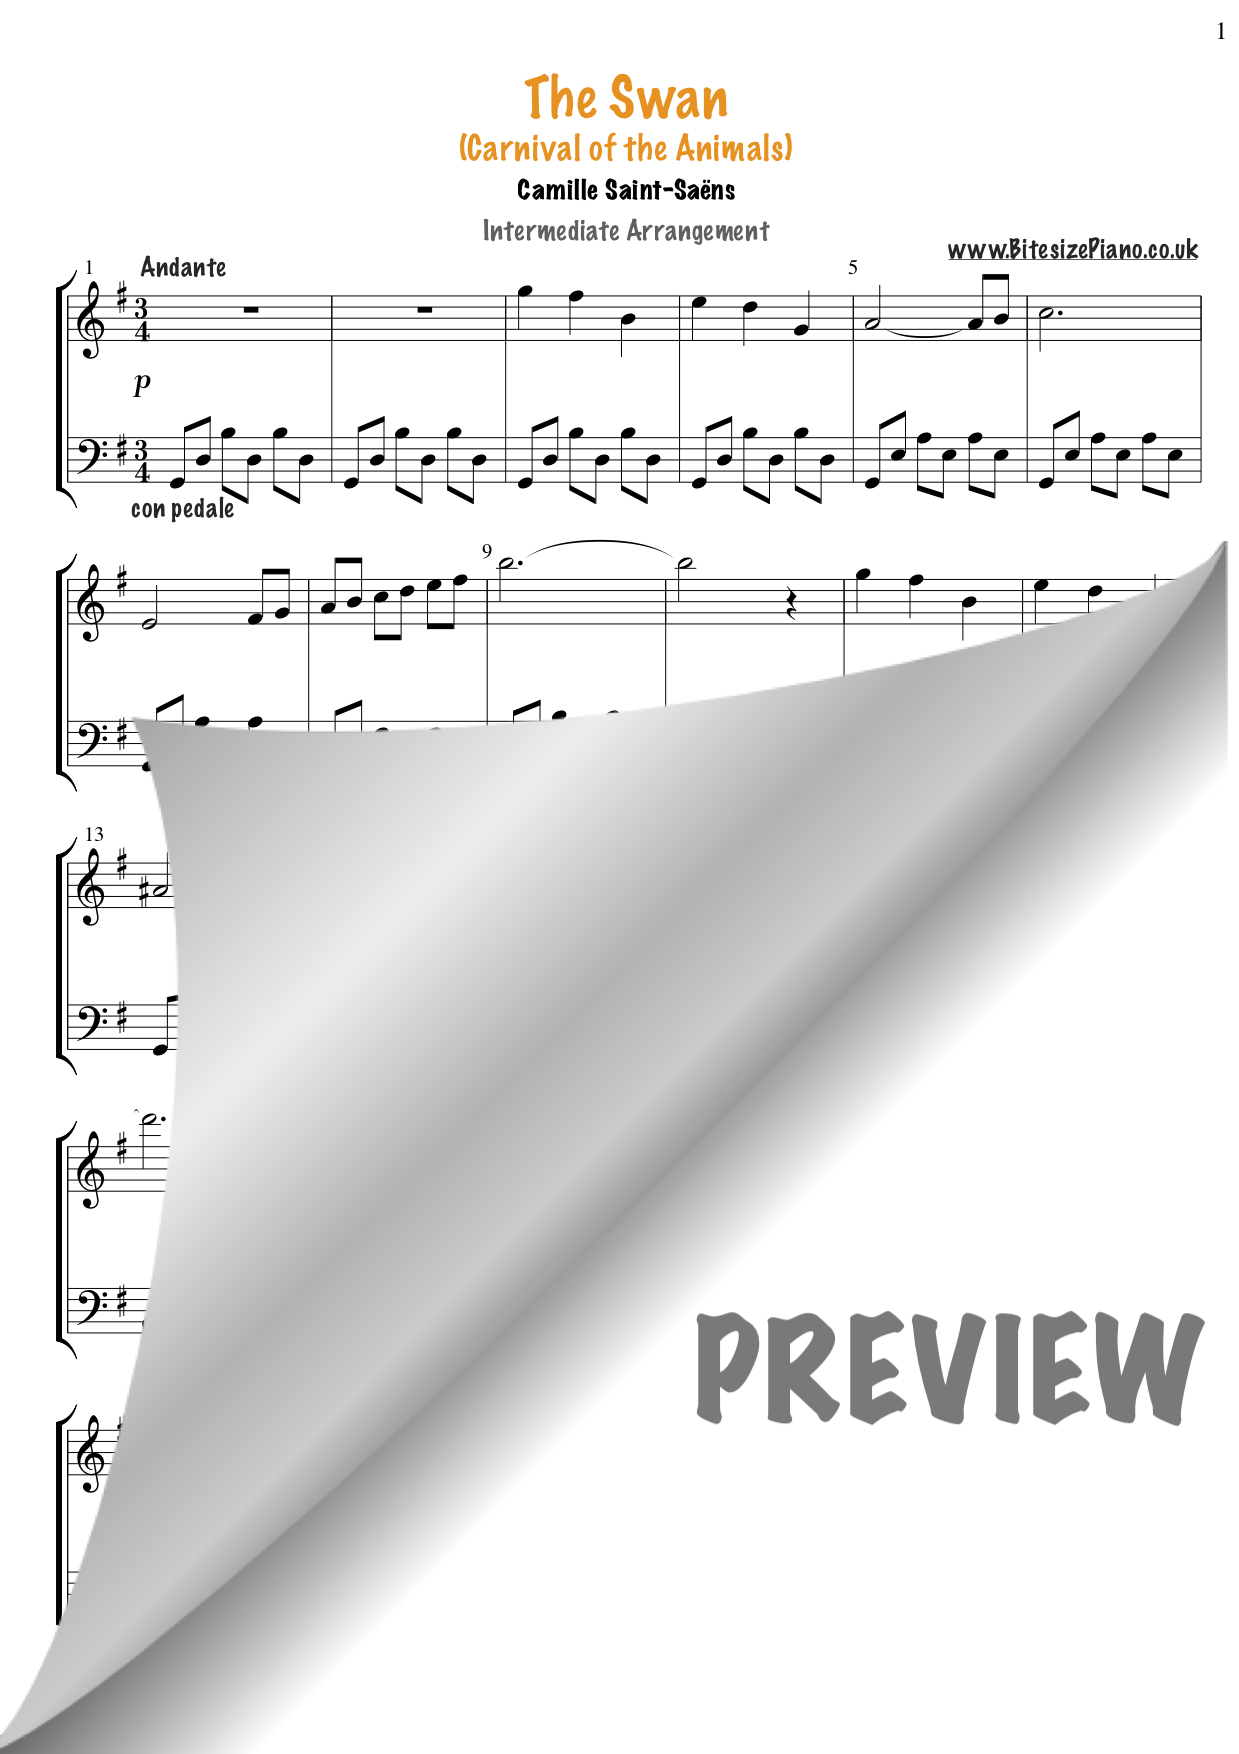 The Swan – Camille Saint-Saëns Piano Sheet Music – Bitesize Piano